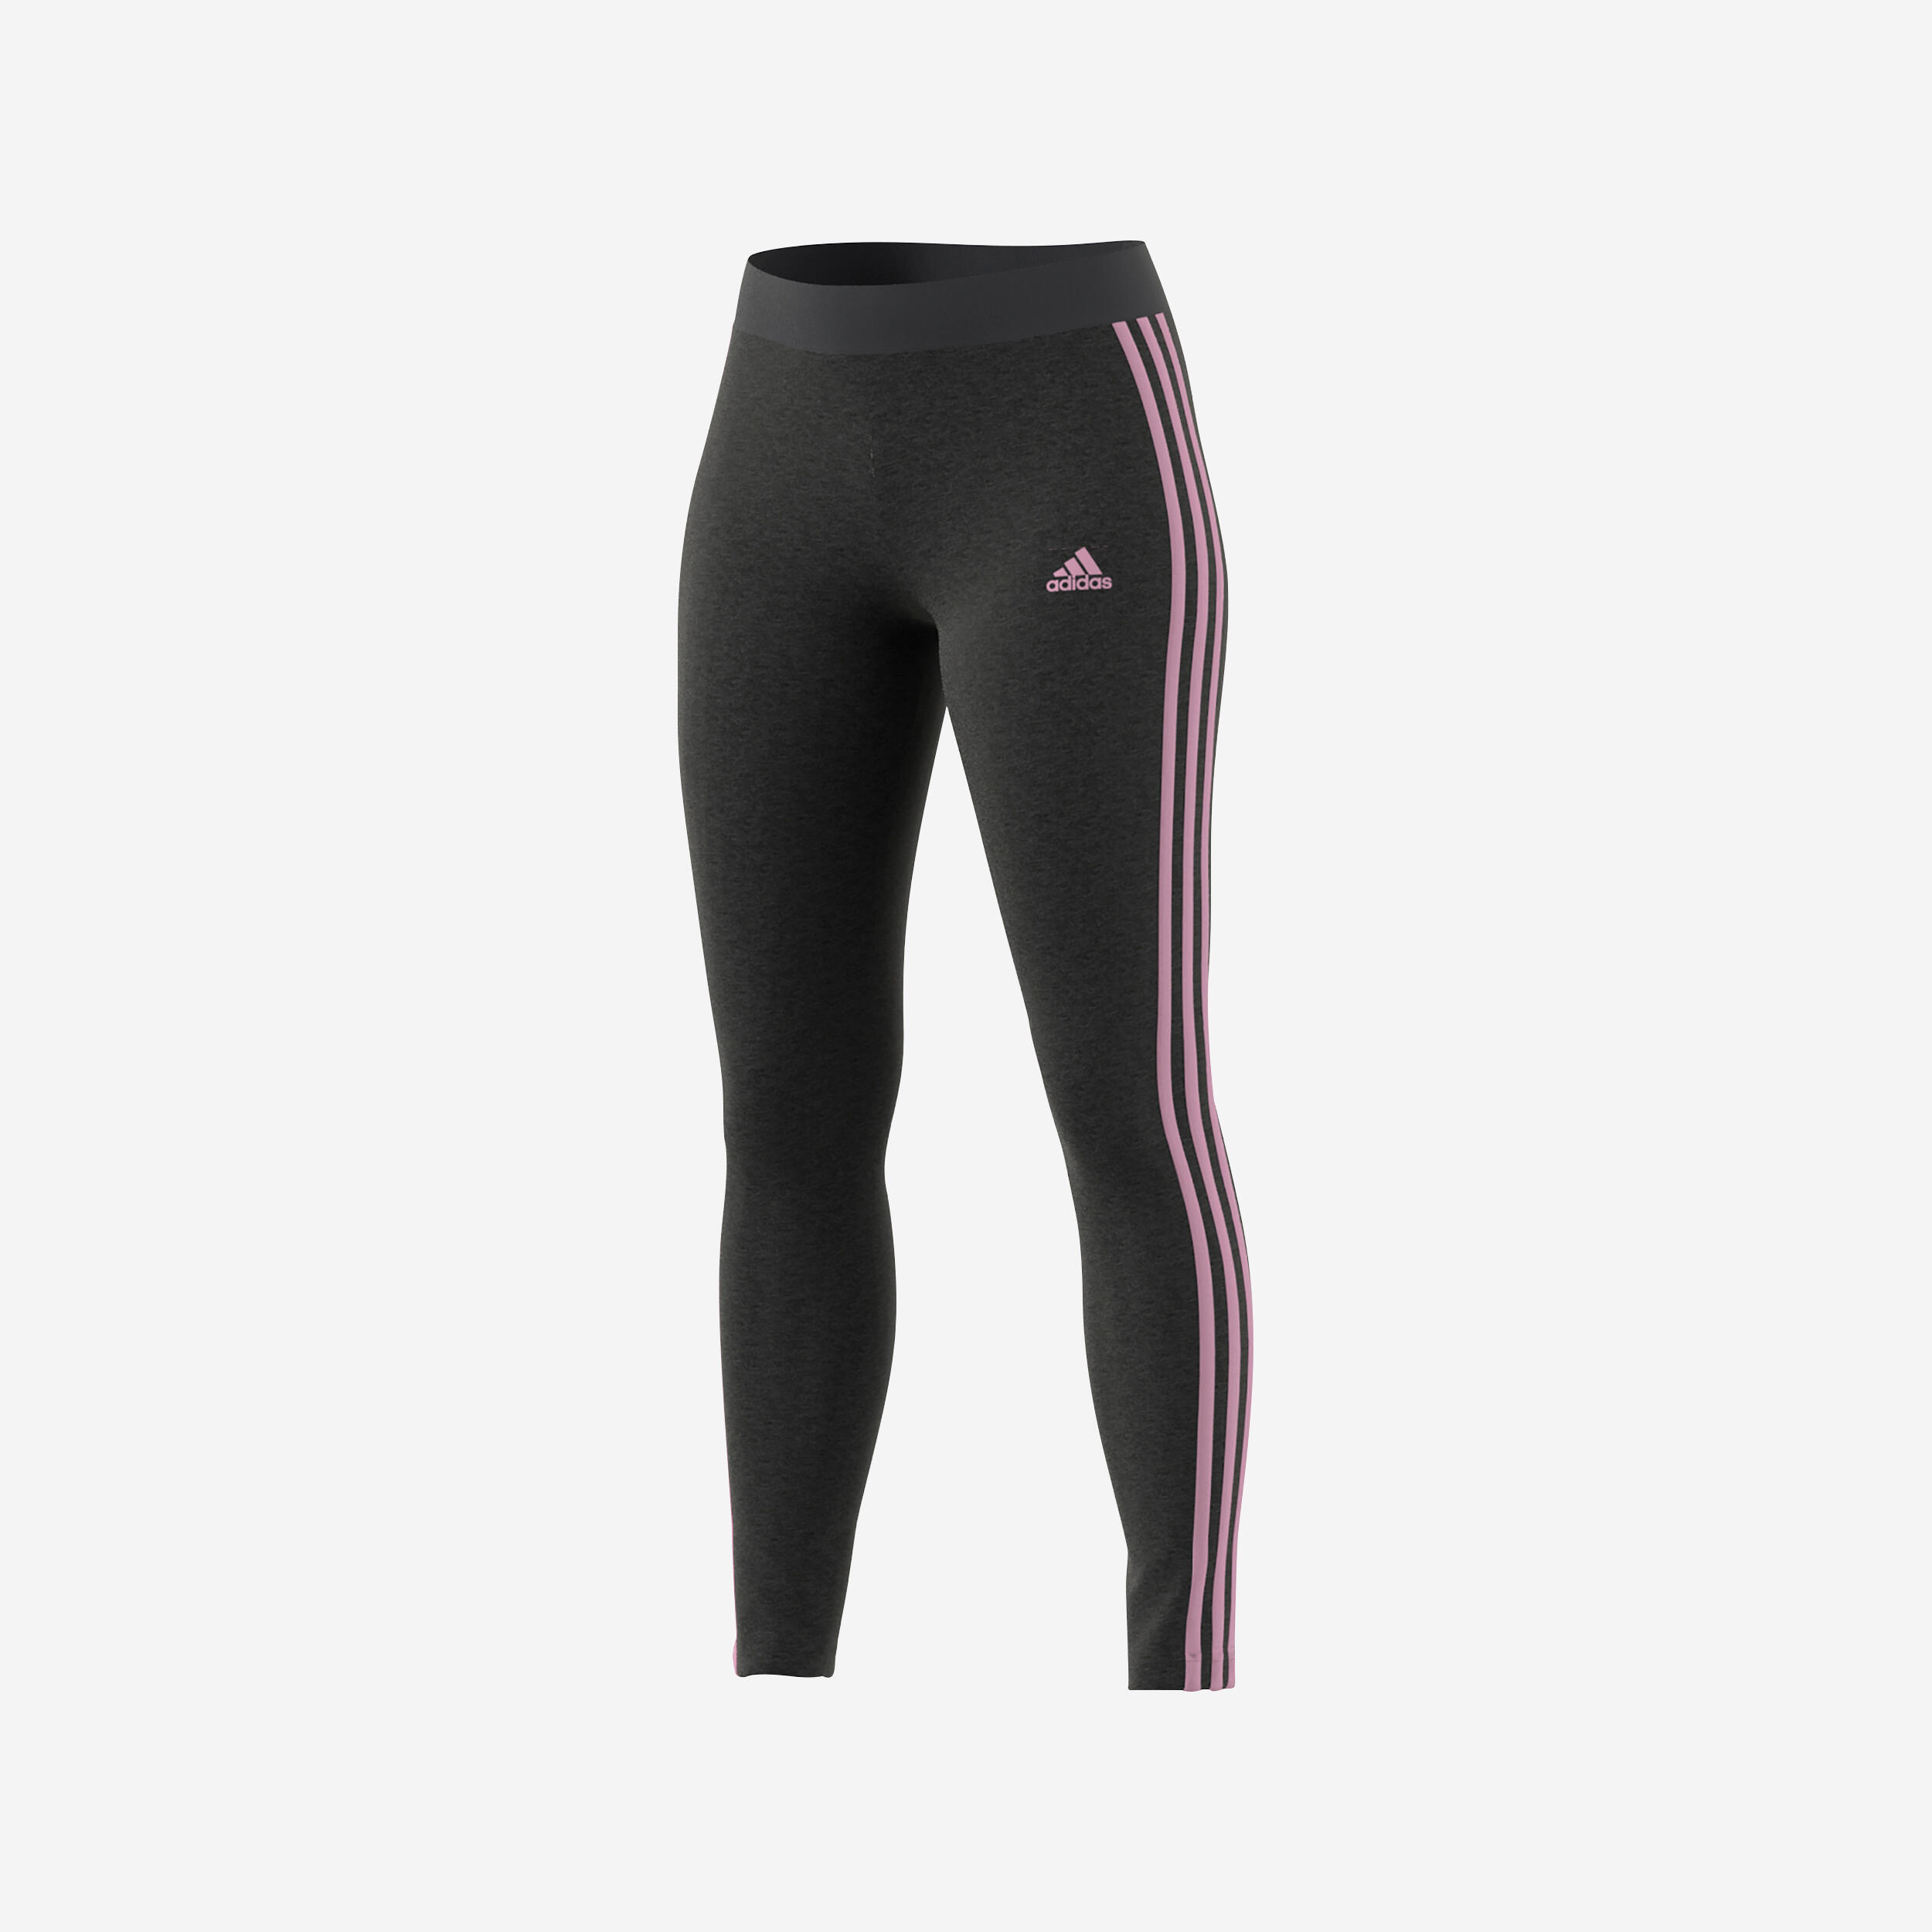 Women's Low-Impact Fitness Leggings - Grey/Pink ADIDAS